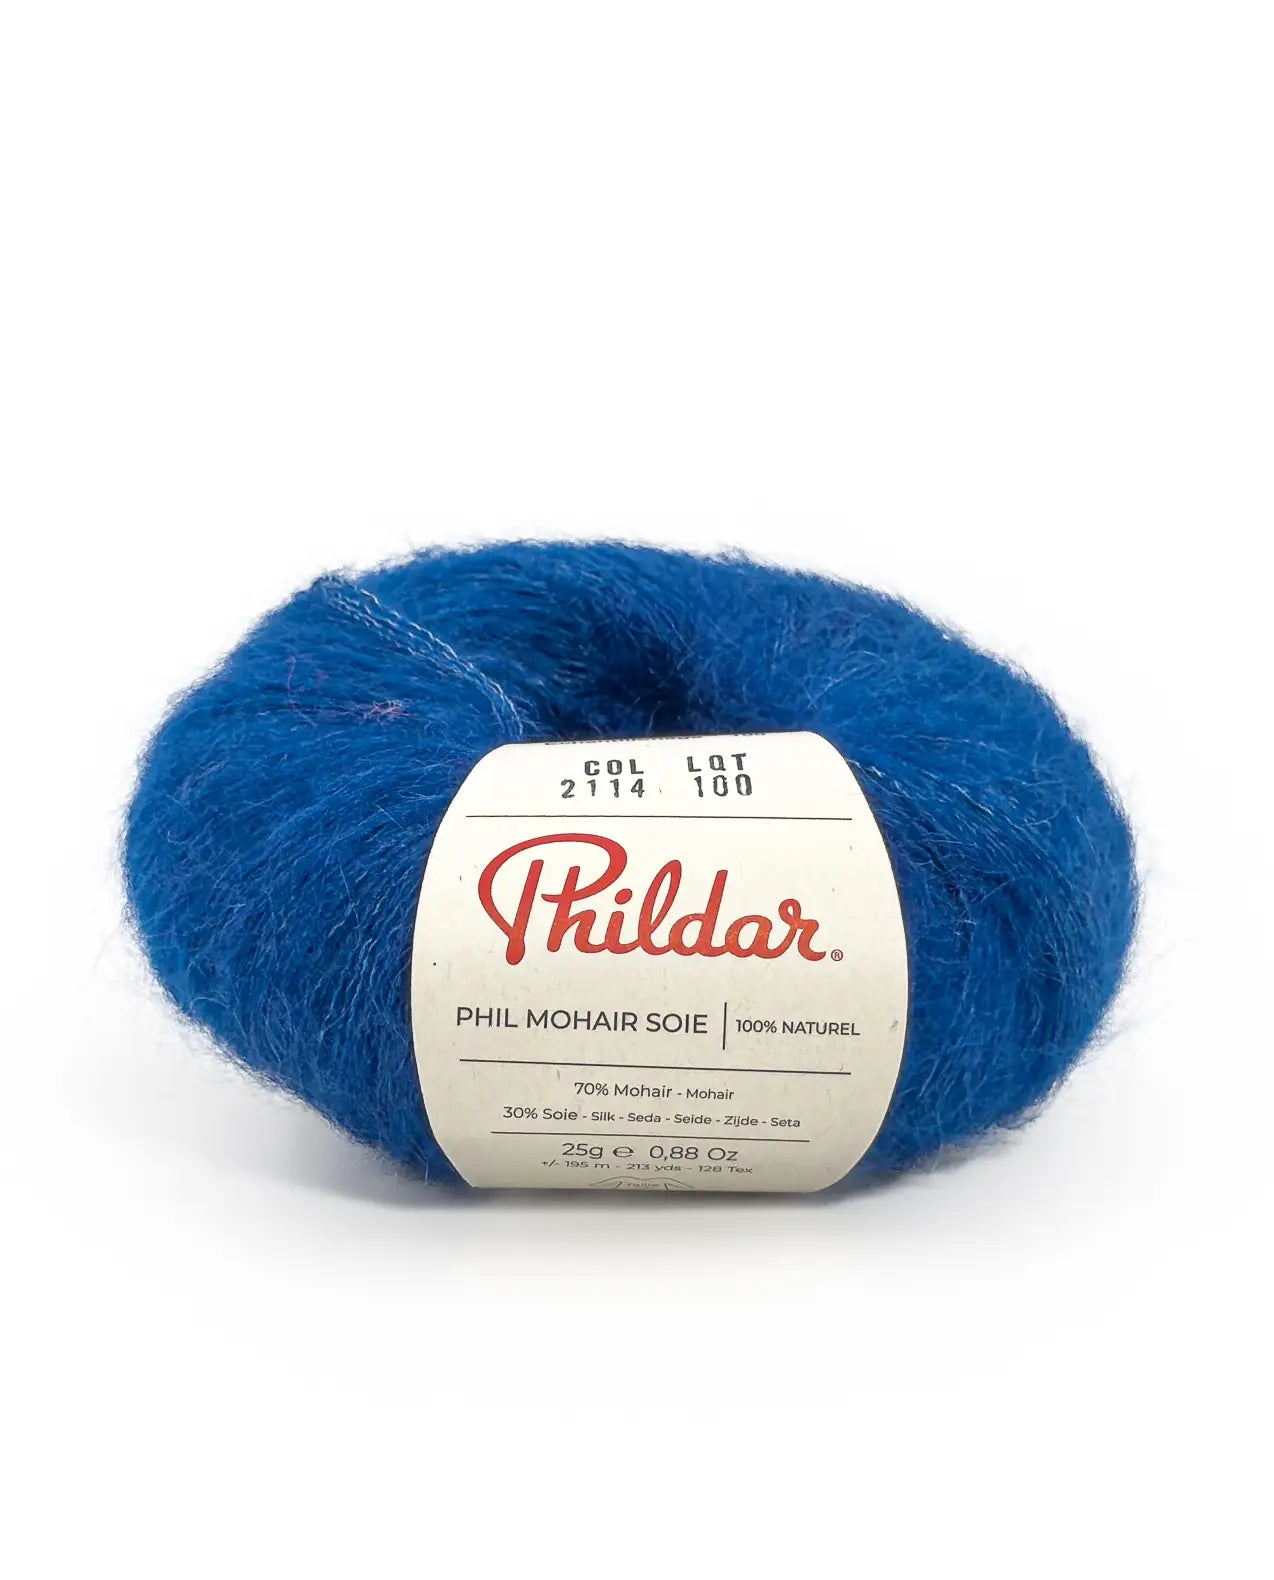 PHILDAR - PHIL MOHAIR SOIE - DEEP BLUE